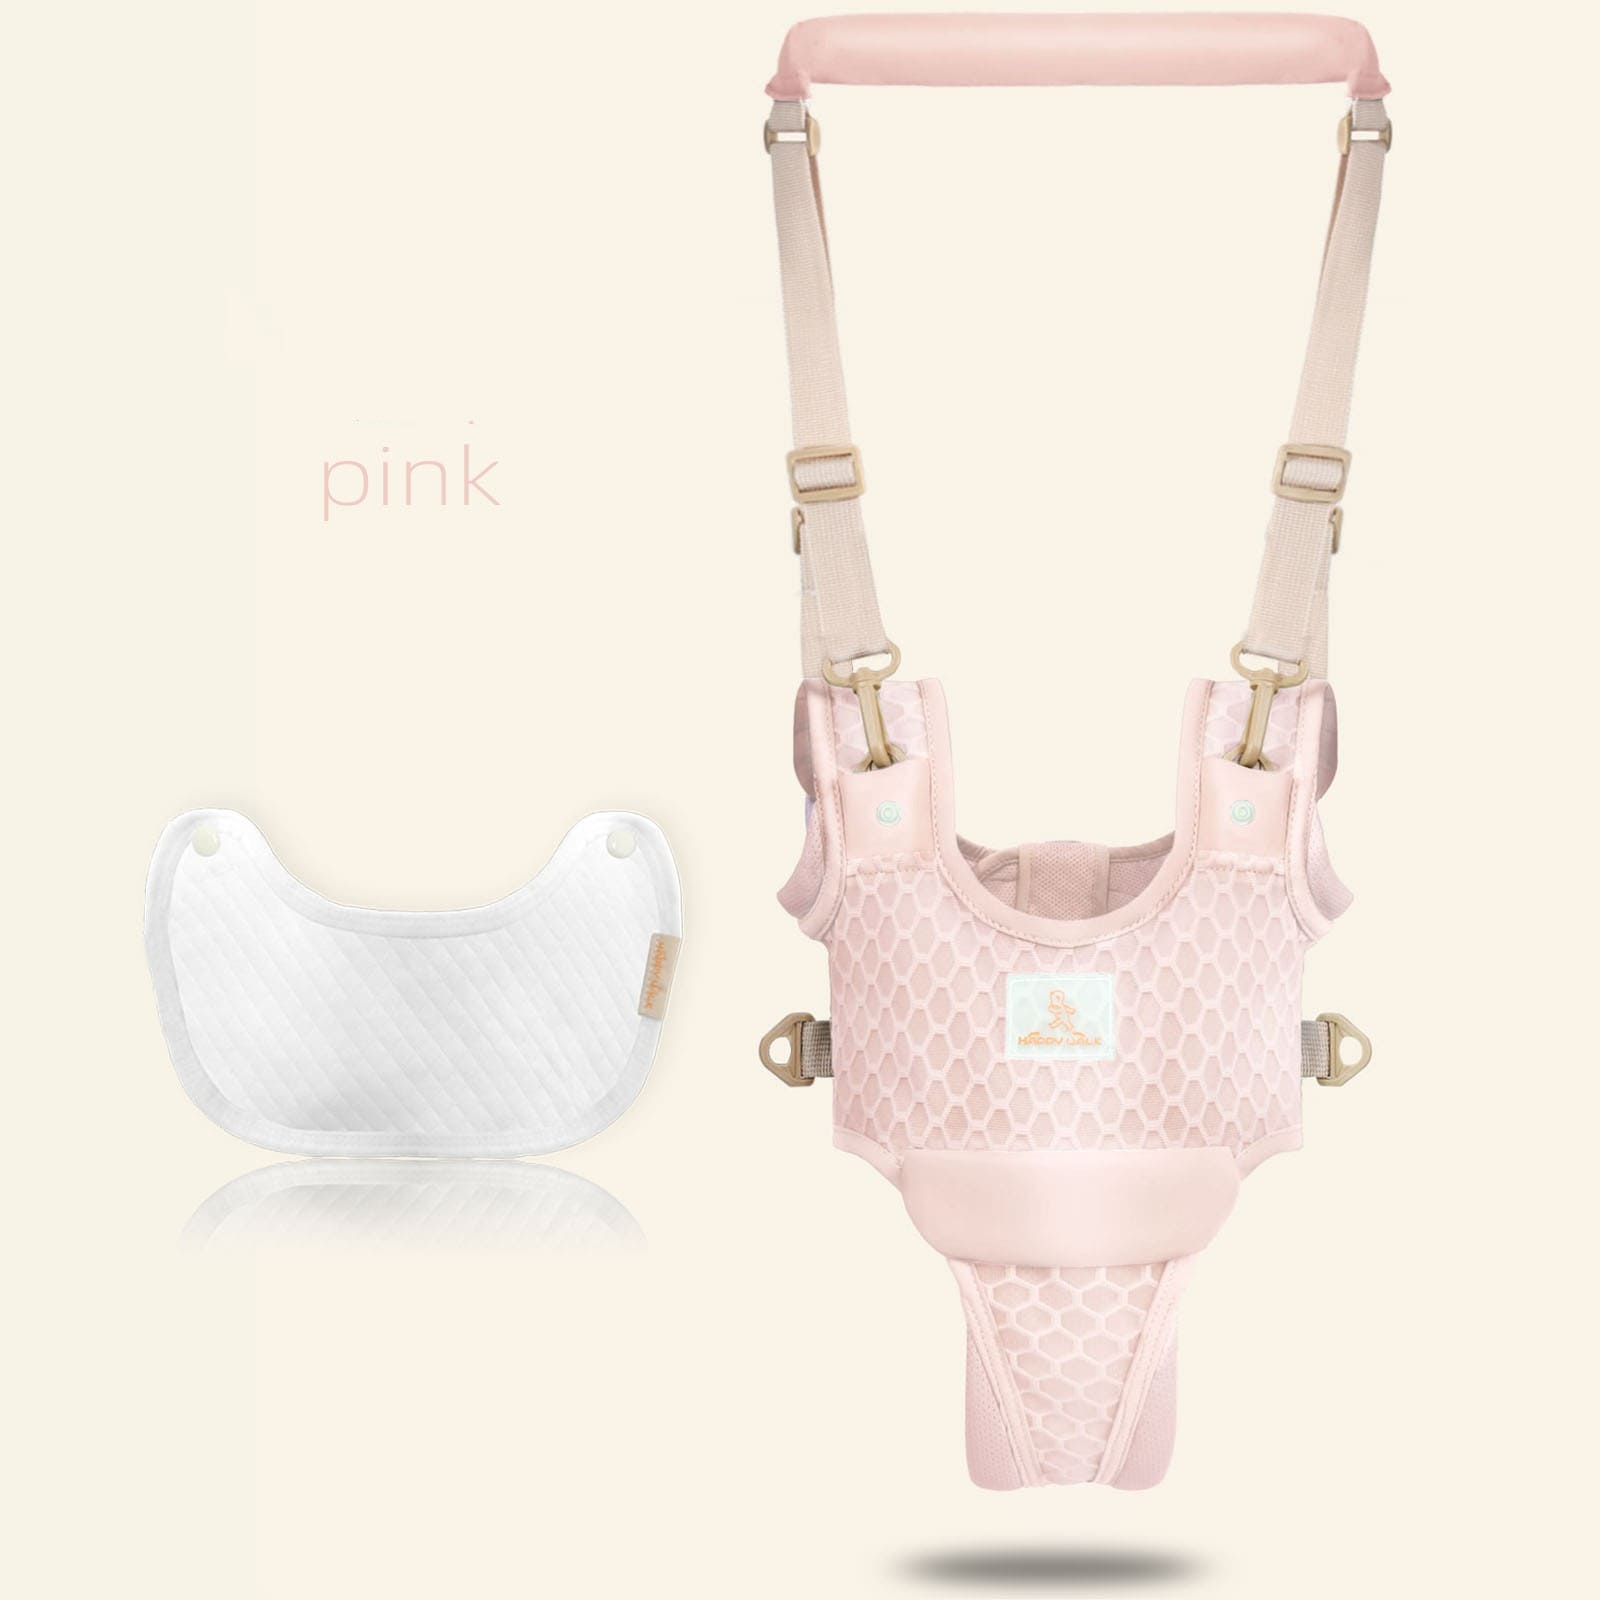 Adjustable Baby Walk Belt Pink